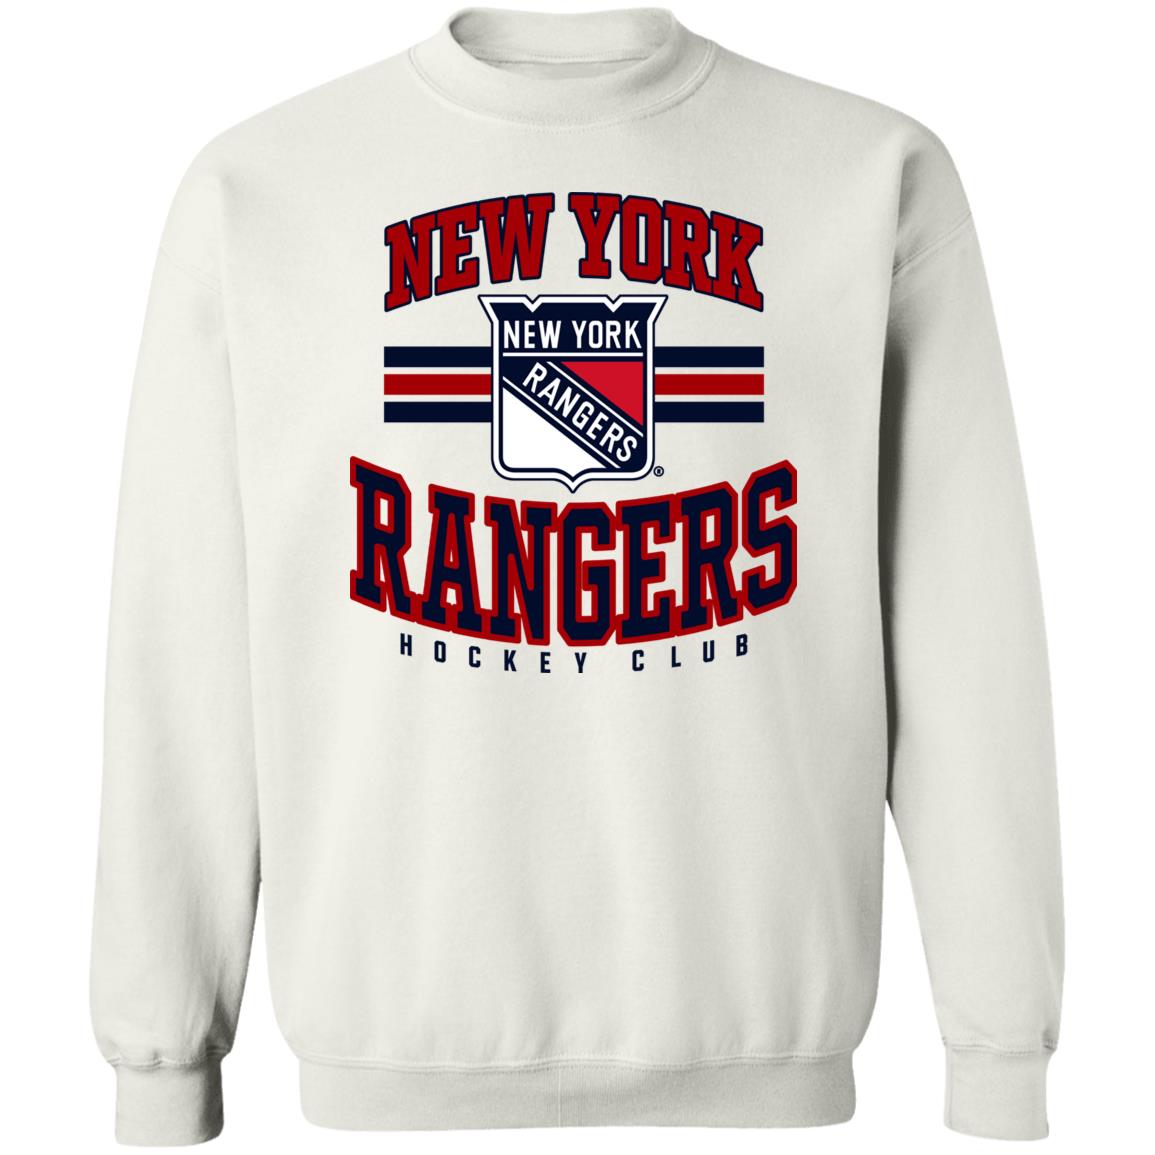 New York Rangers Hockey Club Shirt 2